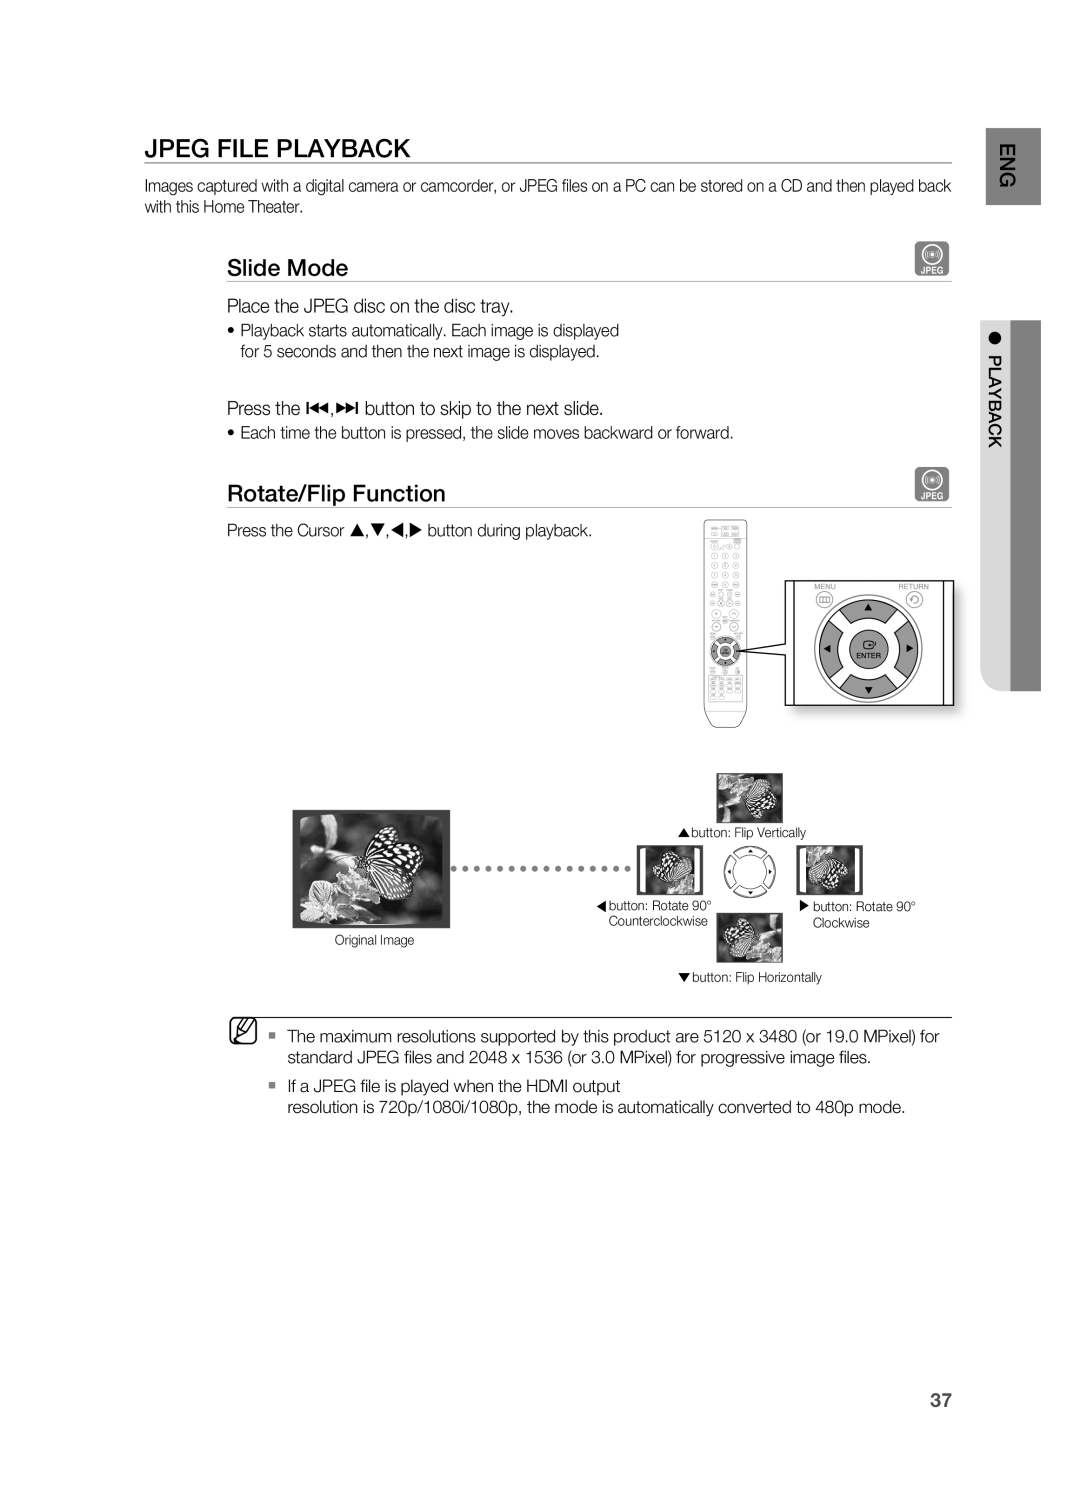 Samsung HT-TZ515 user manual JPEg FILE PLAYBACK, Slide Mode, rotate/Flip Function 